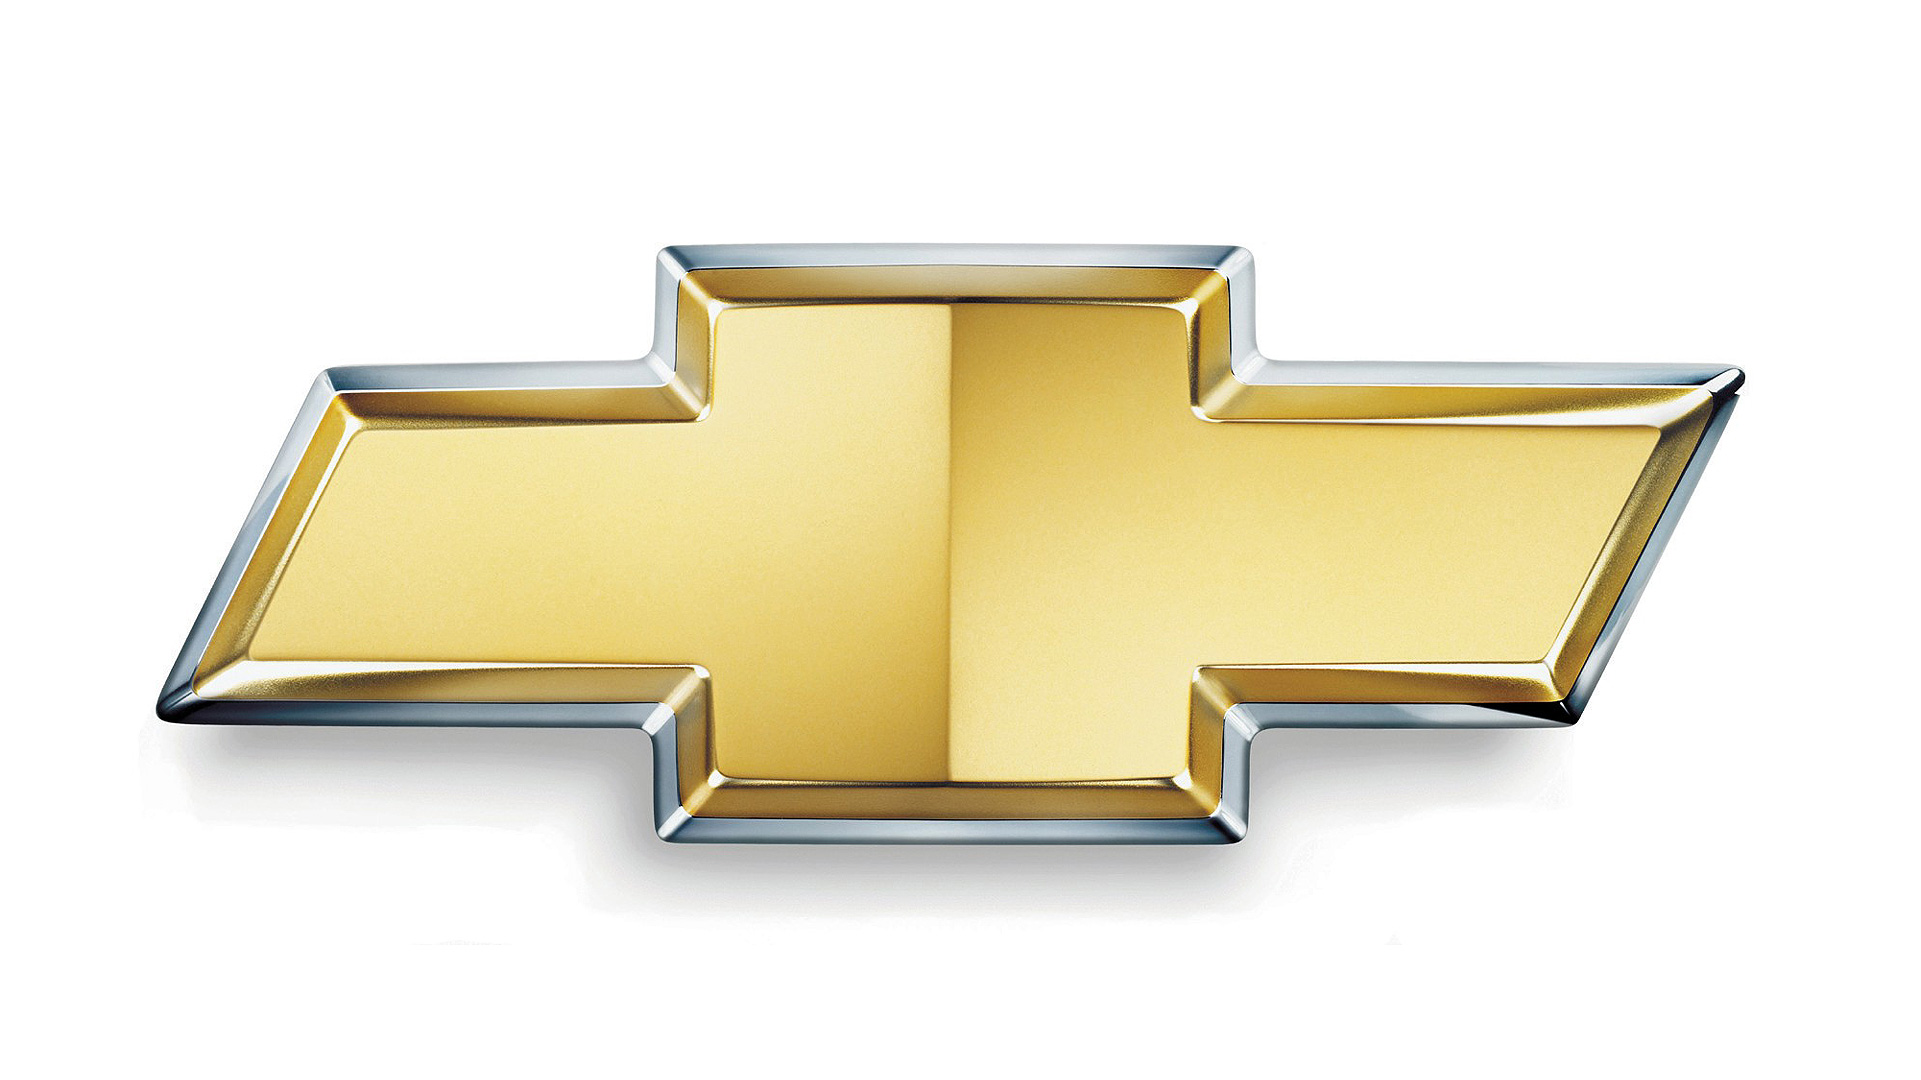 chevy logo Chevrolet logo hd meaning information jpg 2